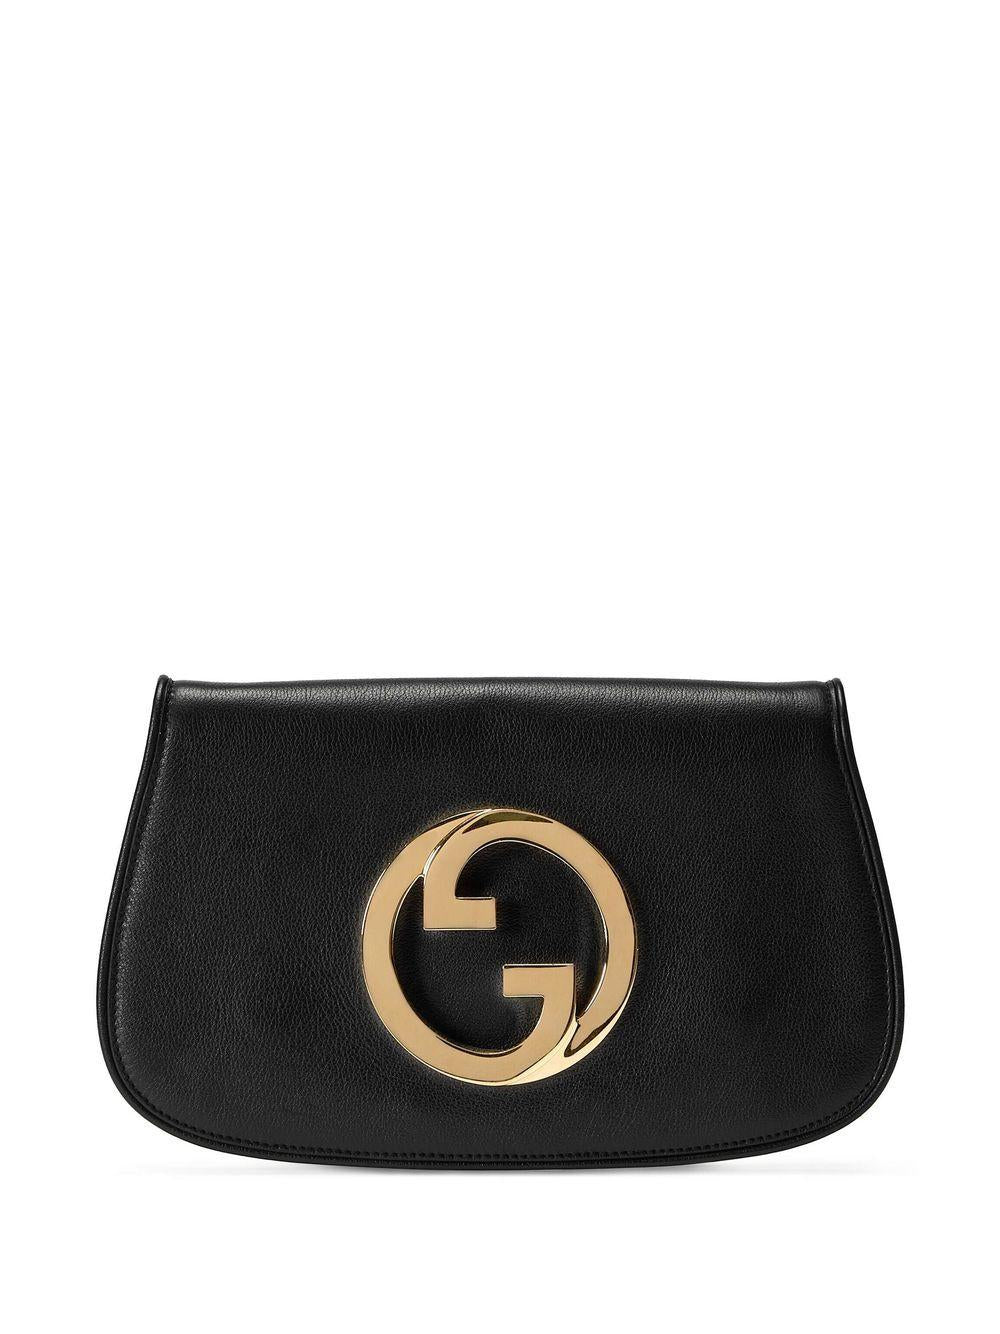 GUCCI Black Leather Shoulder Handbag with Gold Interlocking GG